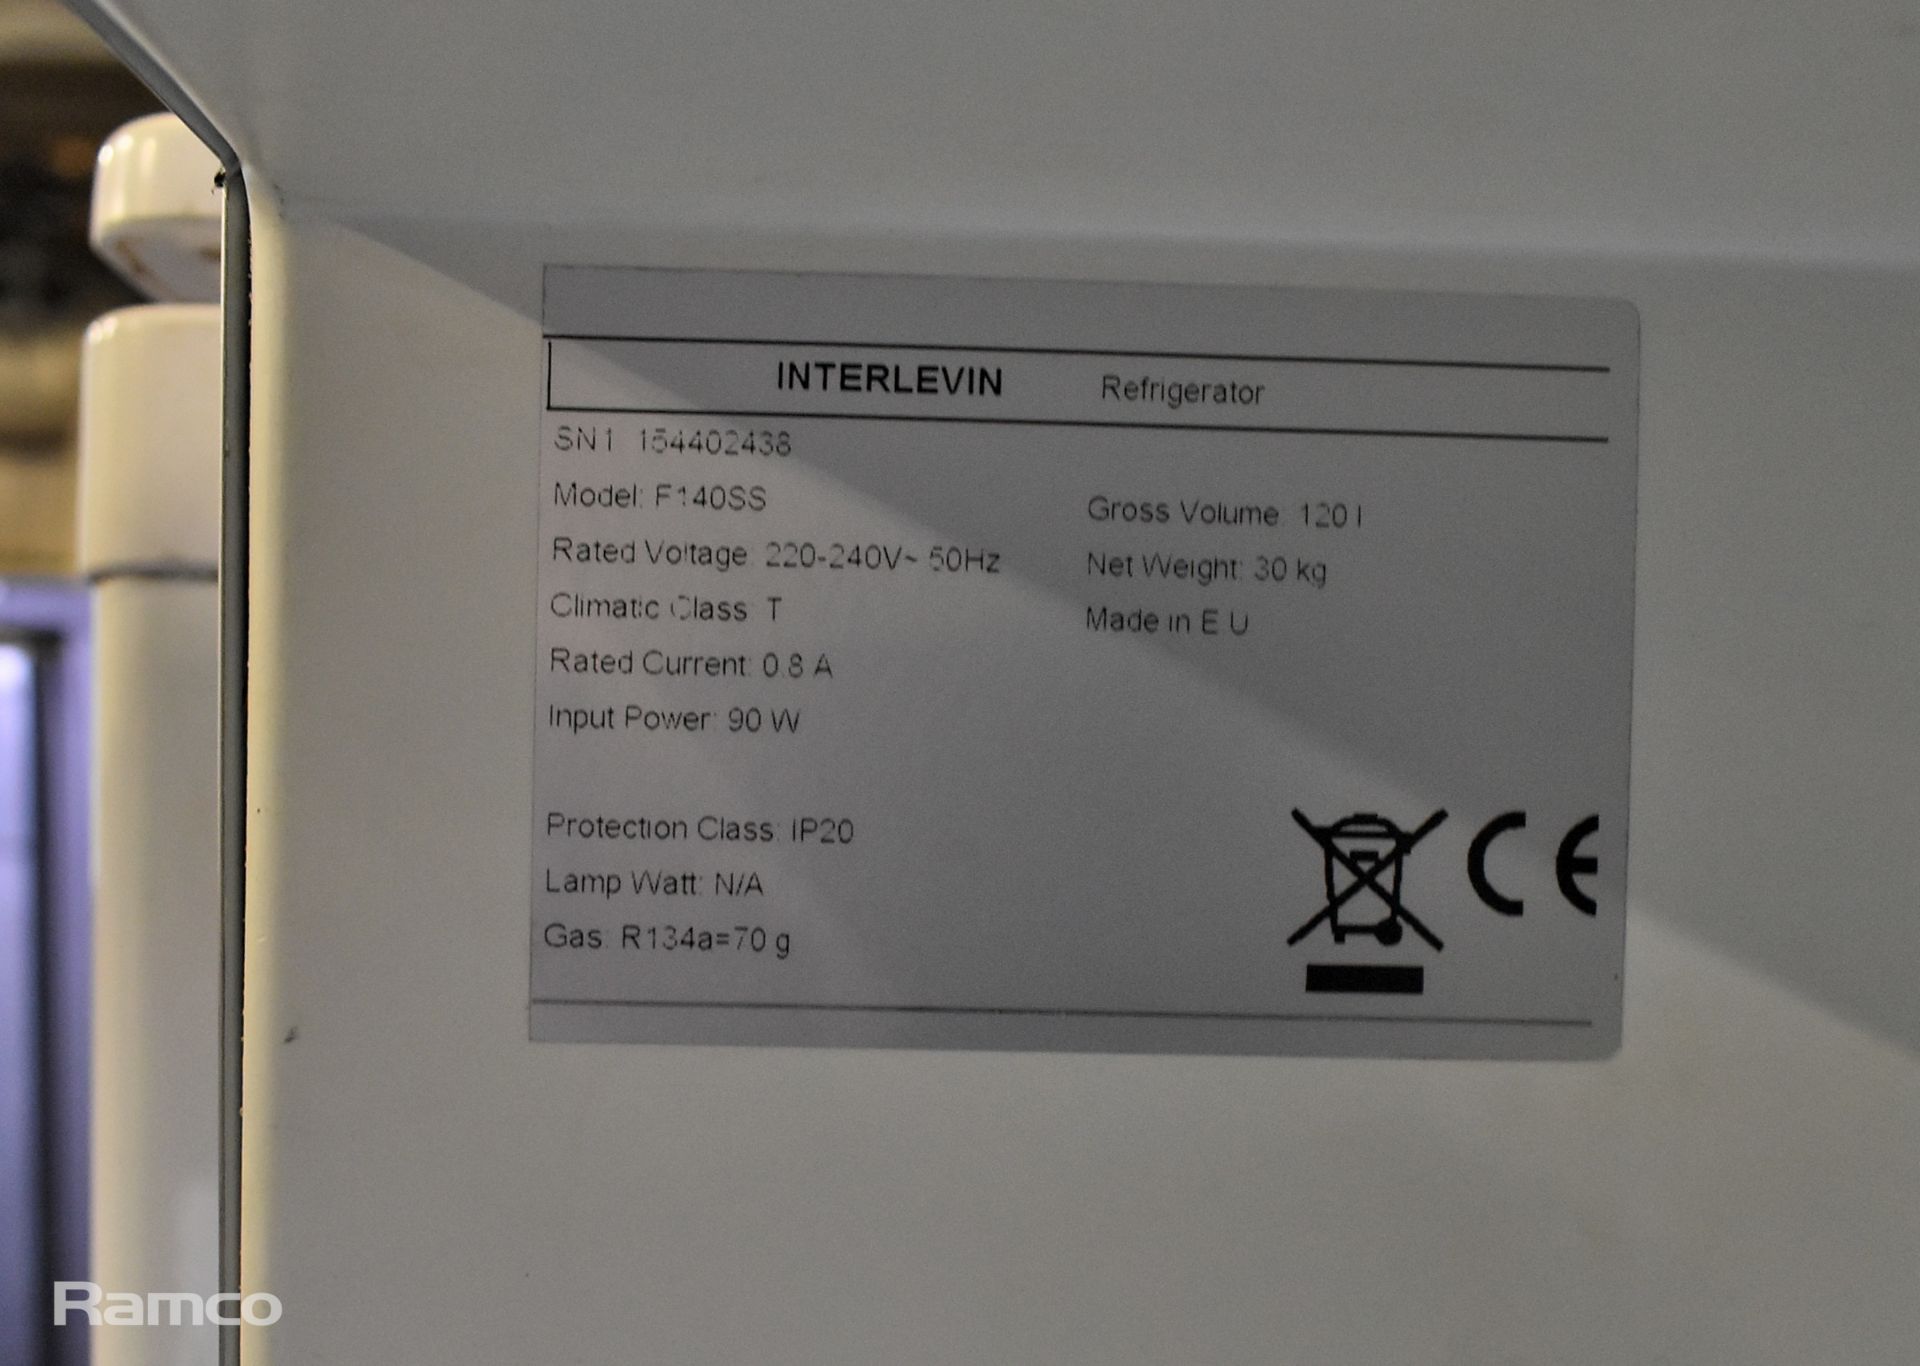 Interlevin F140SS stainless steel single door under counter fridge - W 540 x D 480 x H 870mm - Image 3 of 5